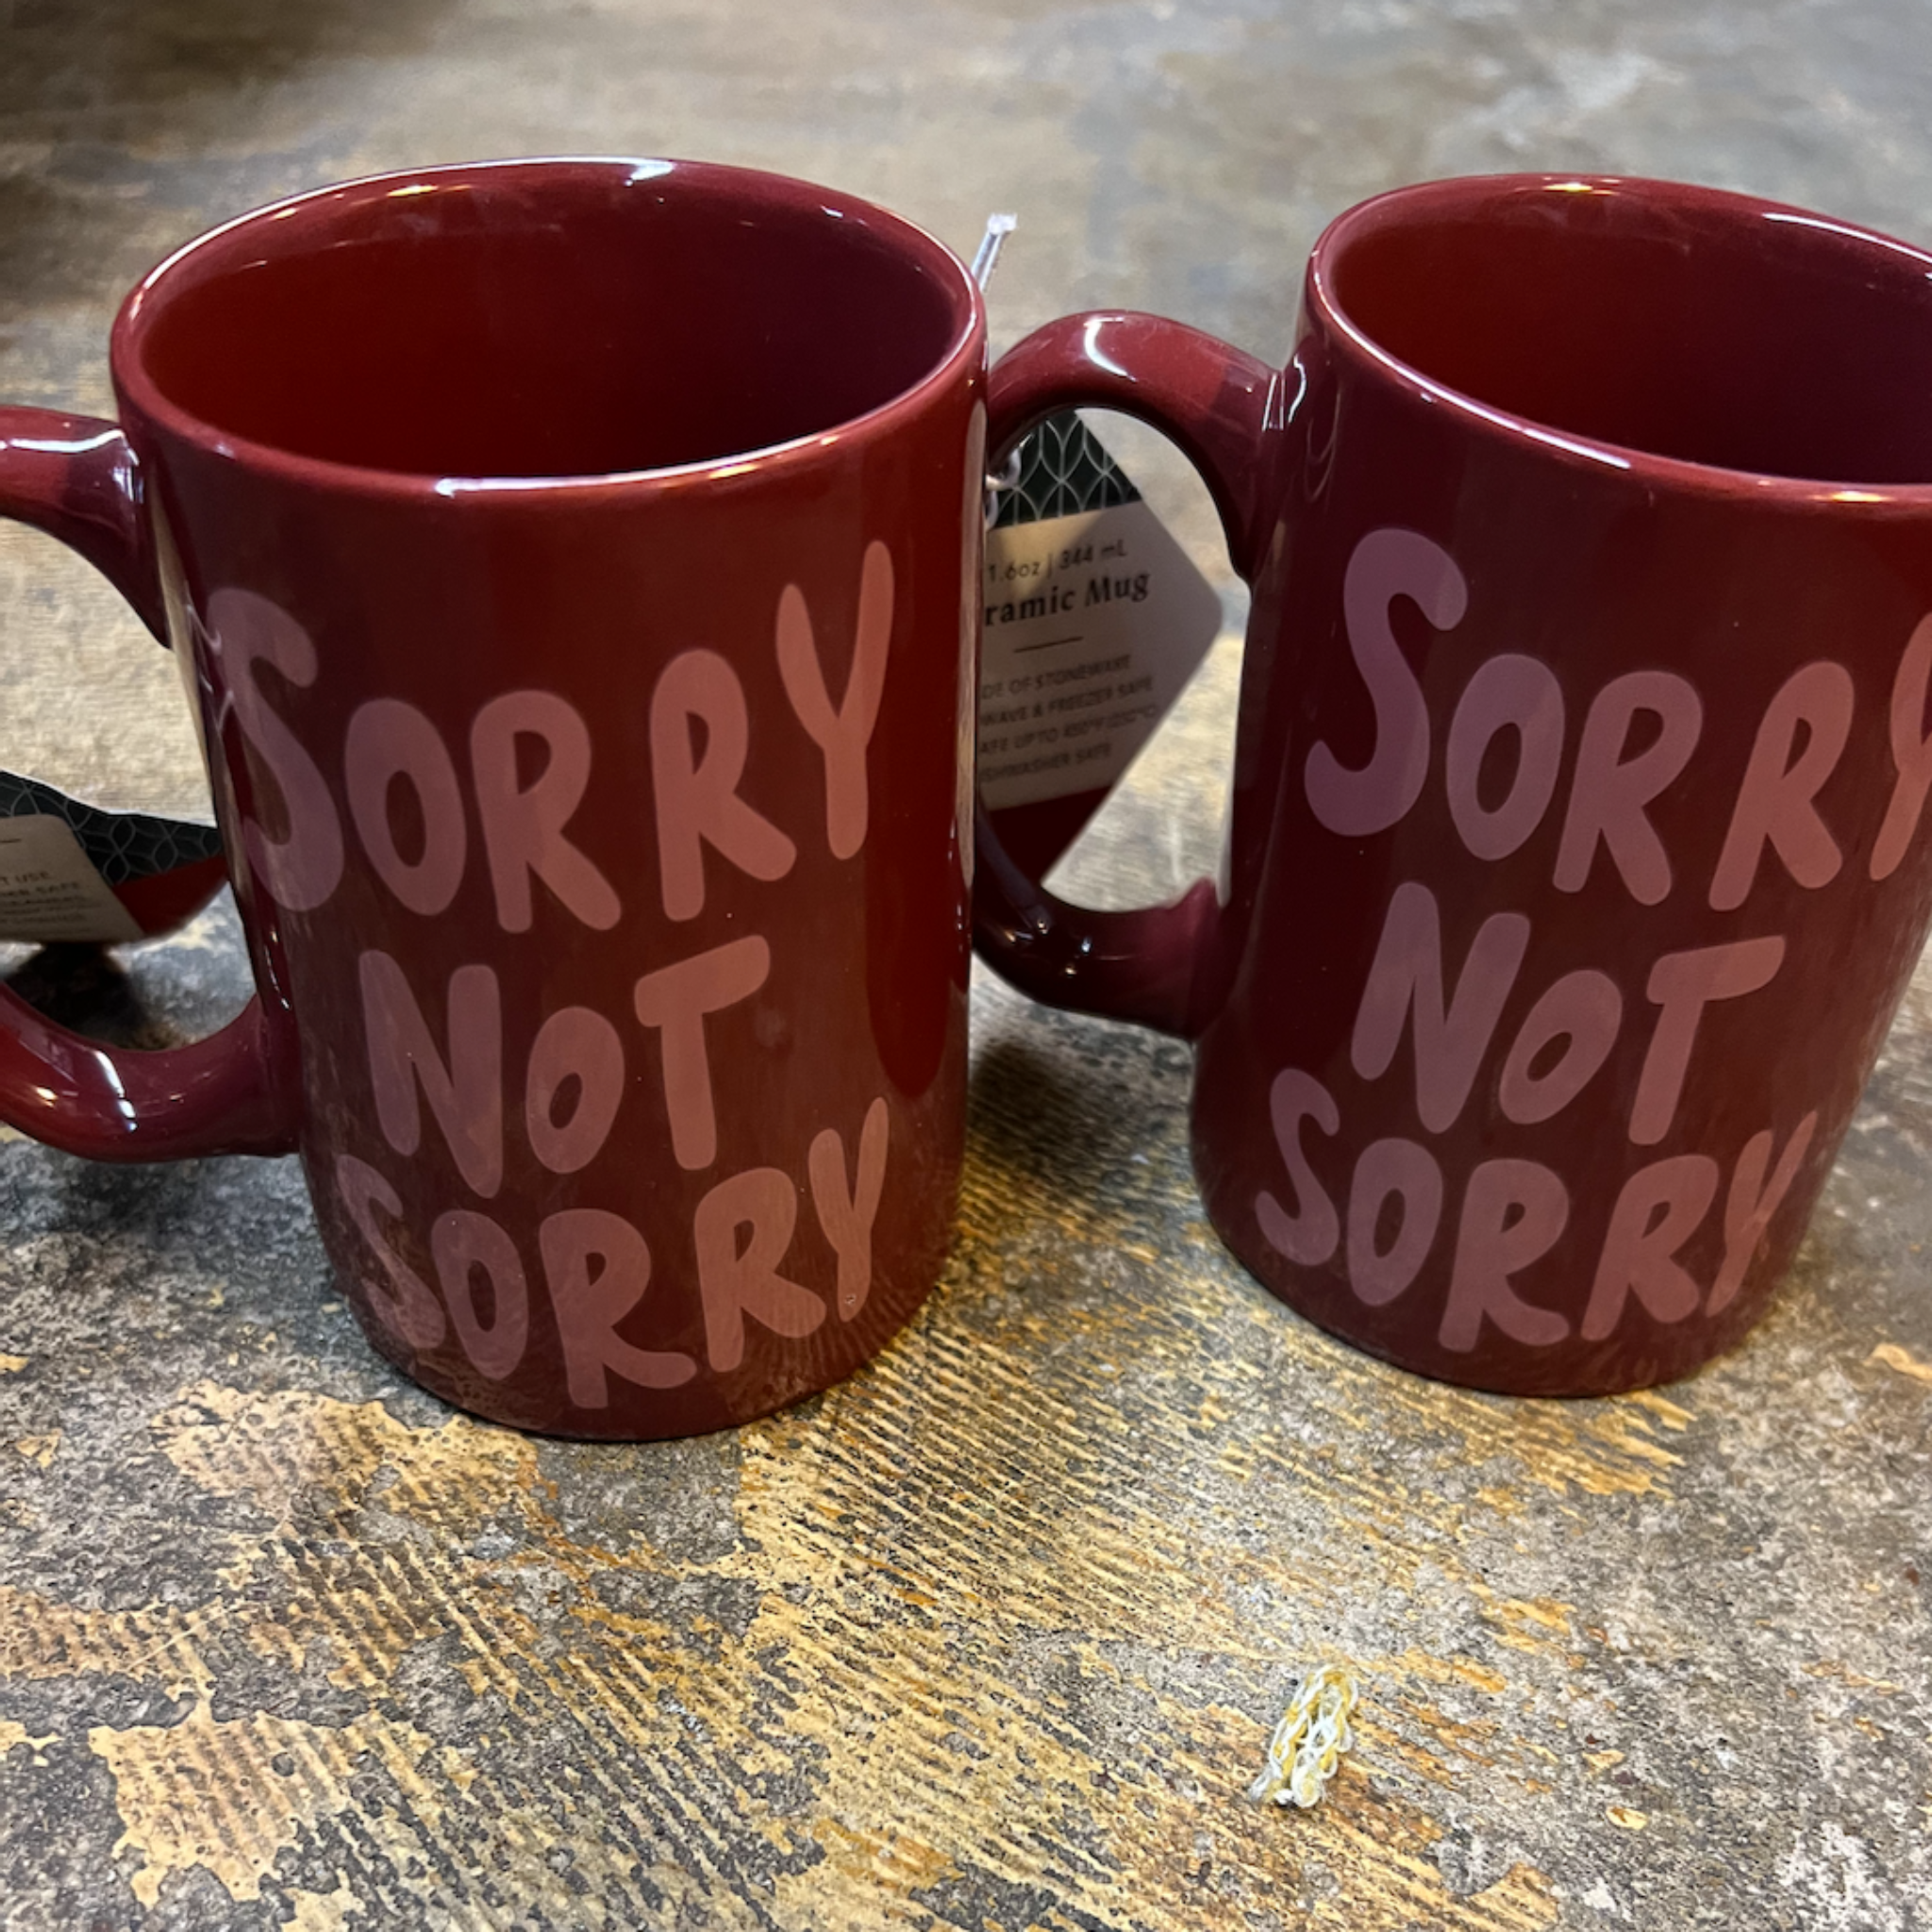 Sorry not Sorry Mug